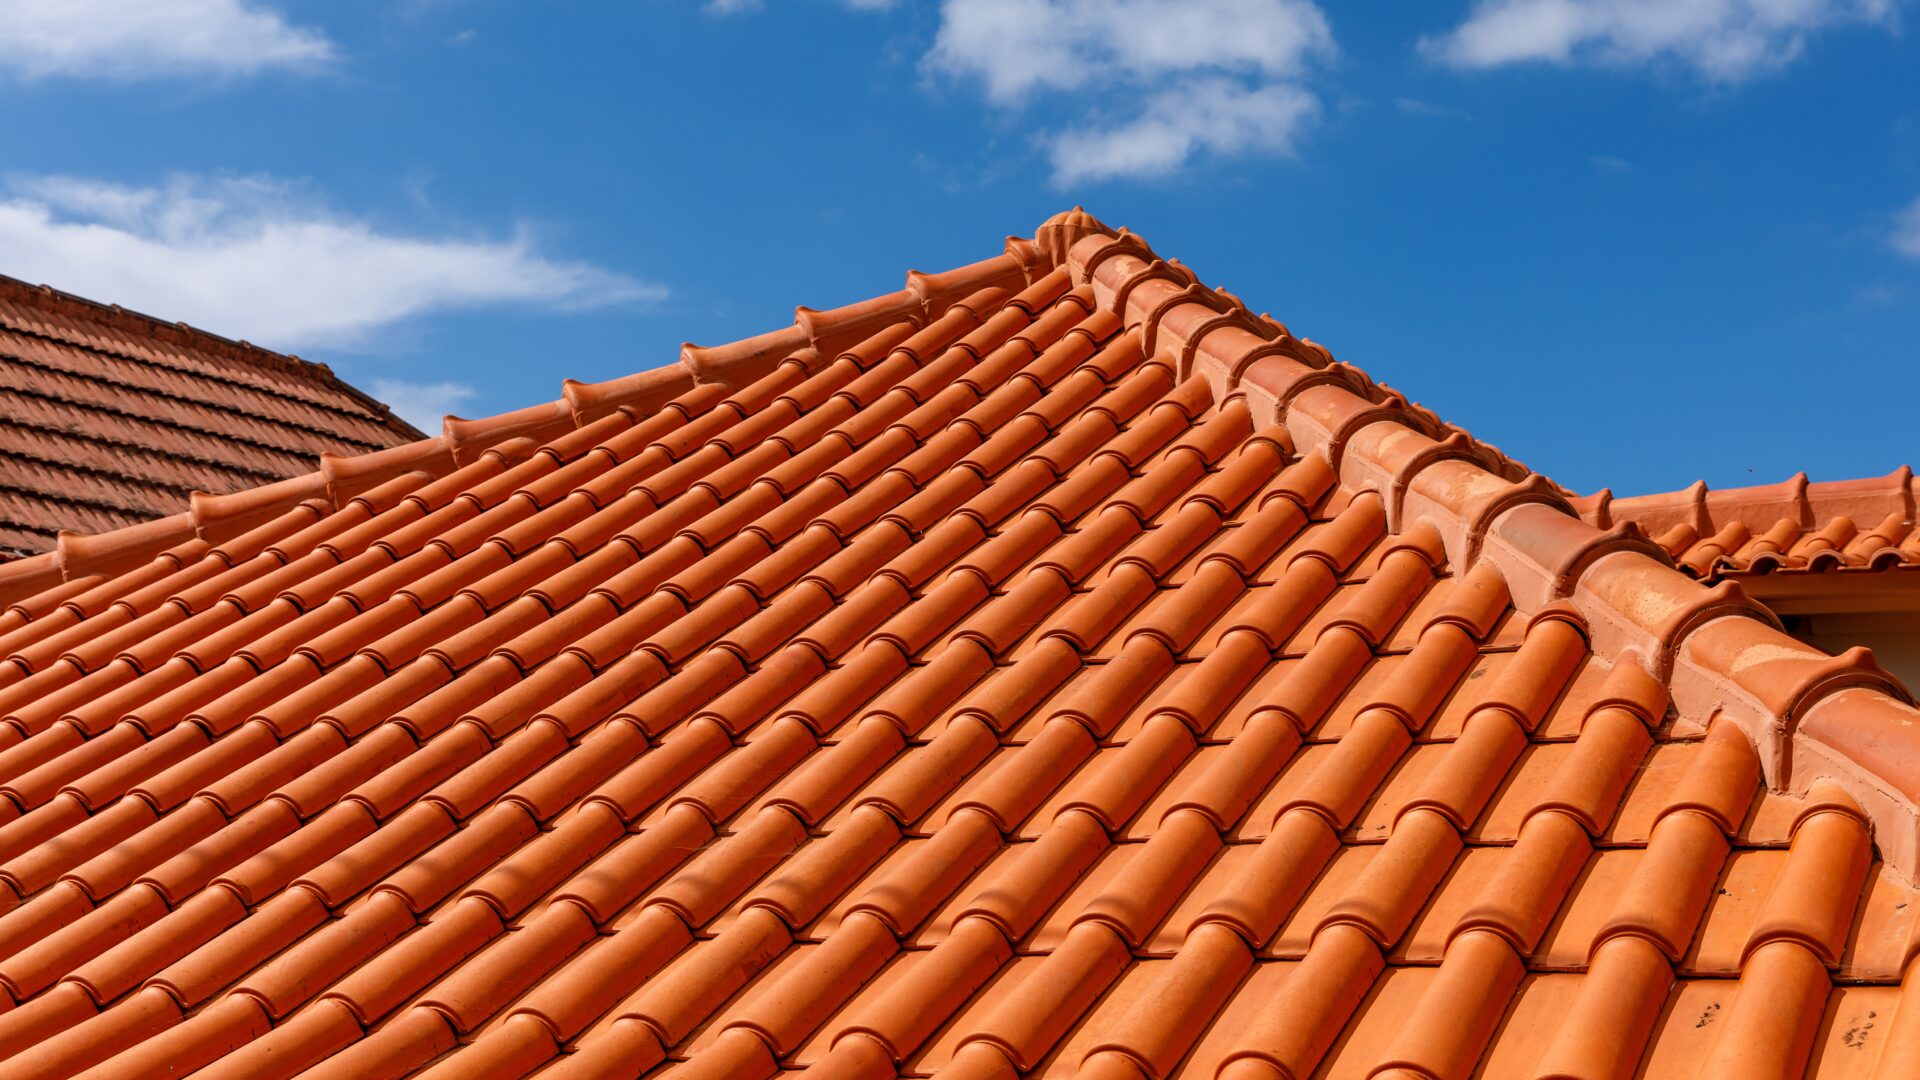 Closeup of orange tile roofing